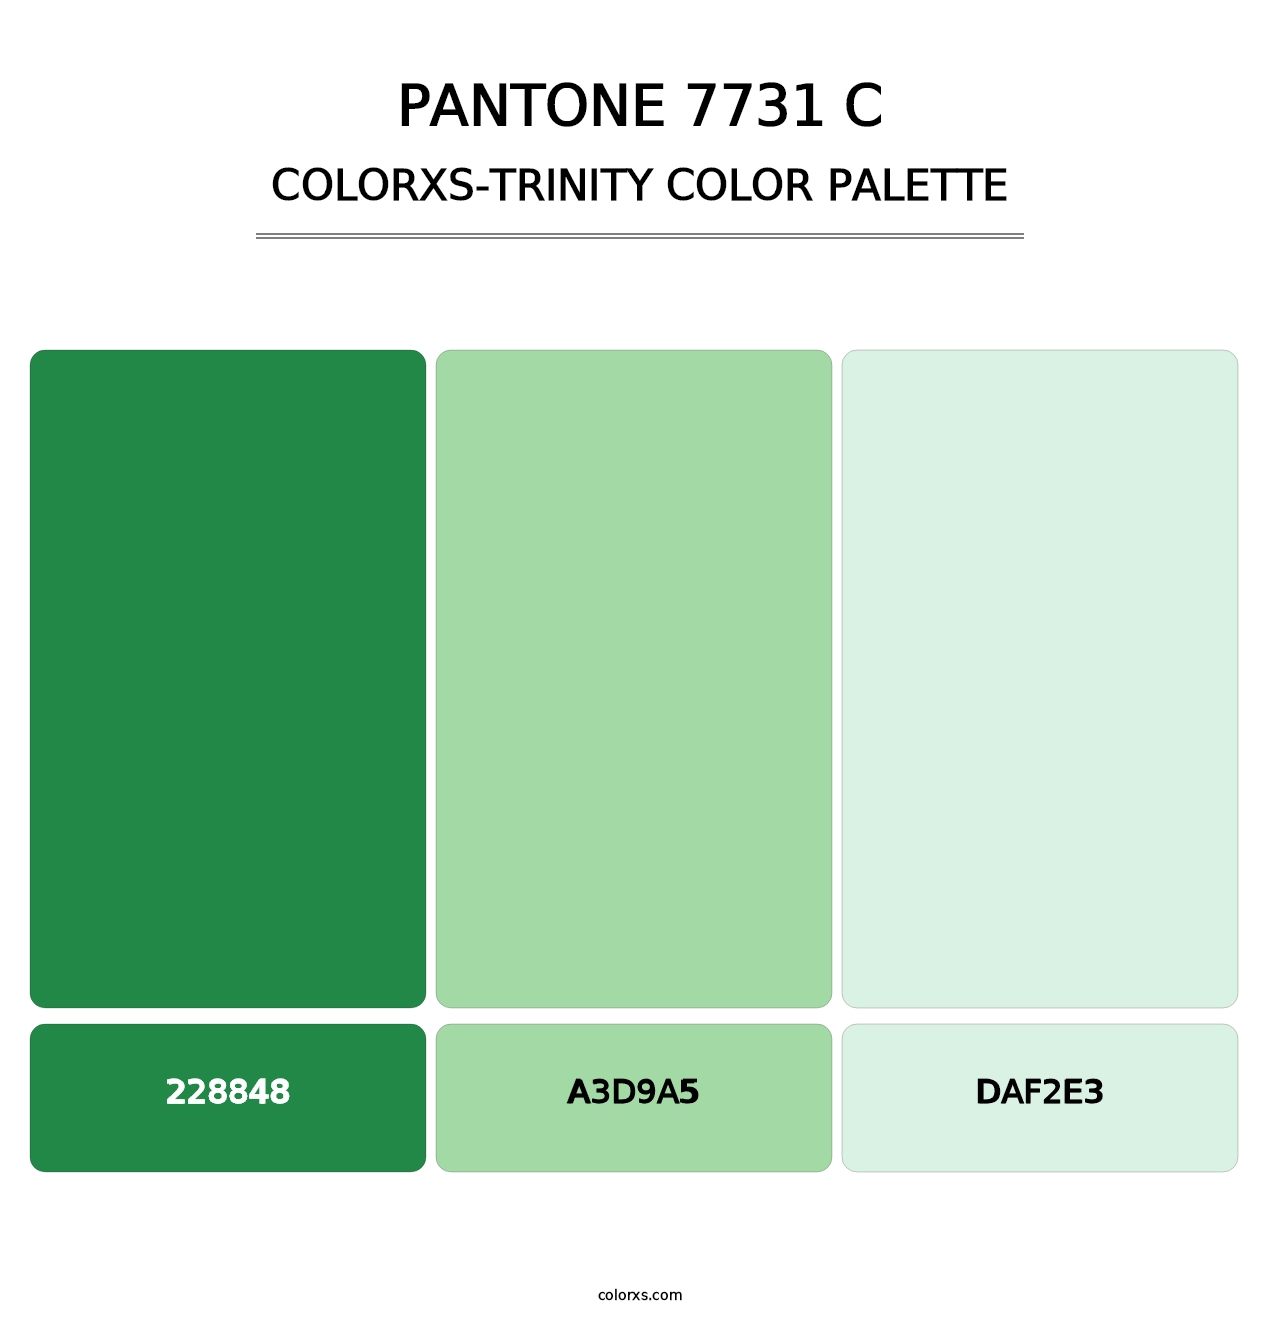 PANTONE 7731 C - Colorxs Trinity Palette